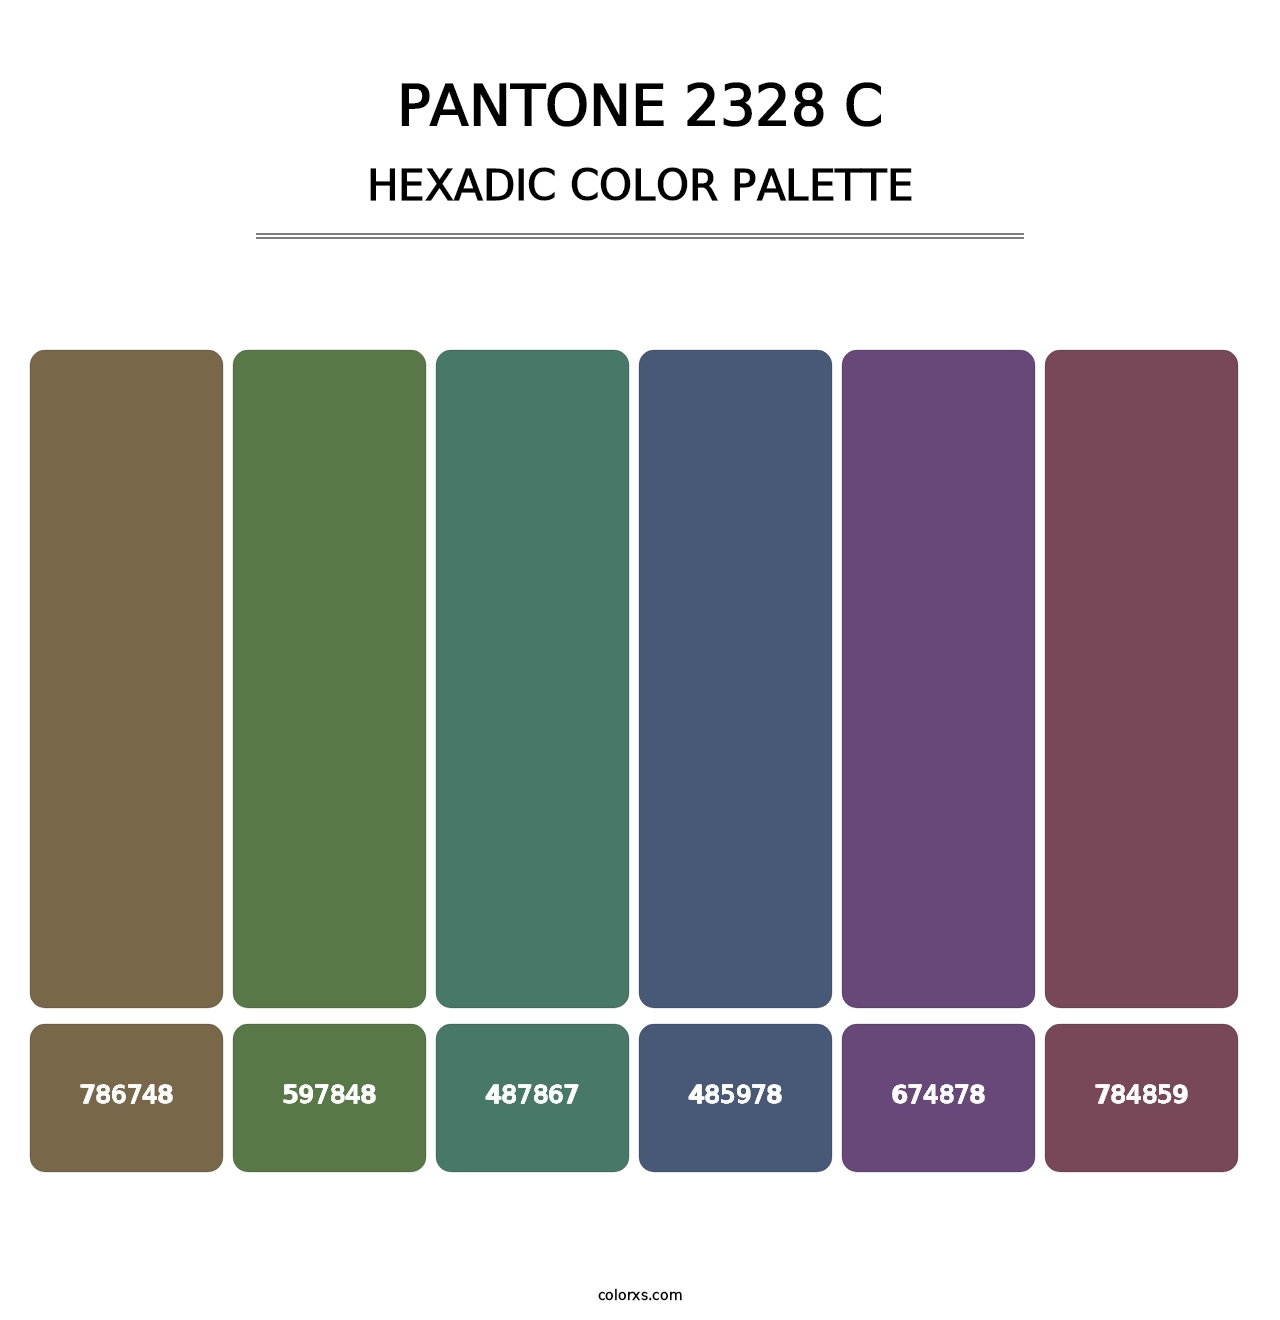 PANTONE 2328 C - Hexadic Color Palette